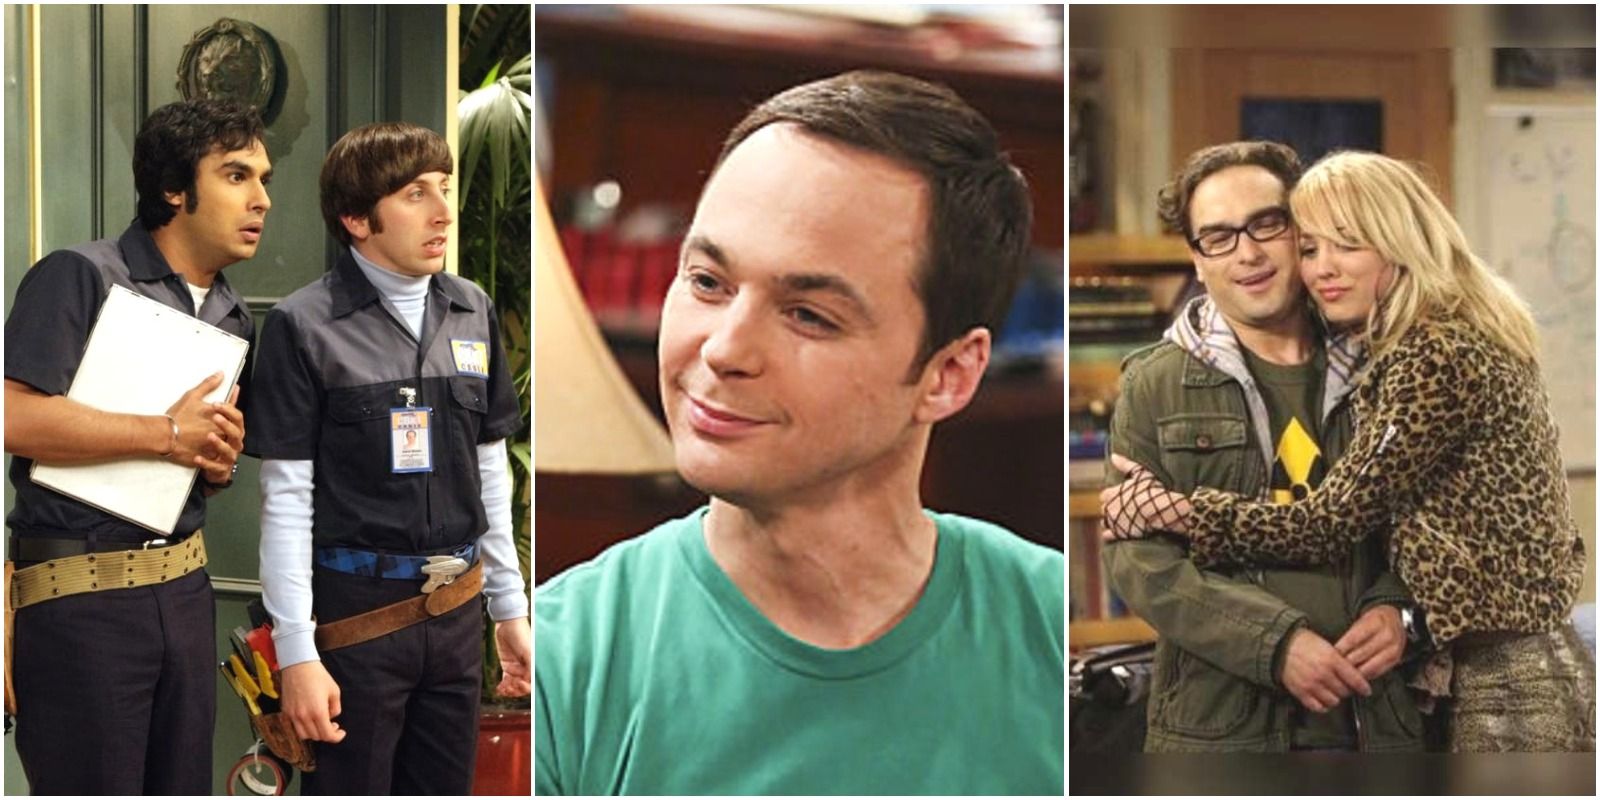 Raj and Howard at a model house, Sheldon, and Penny and Leonard embracing from the Big Bang Theory